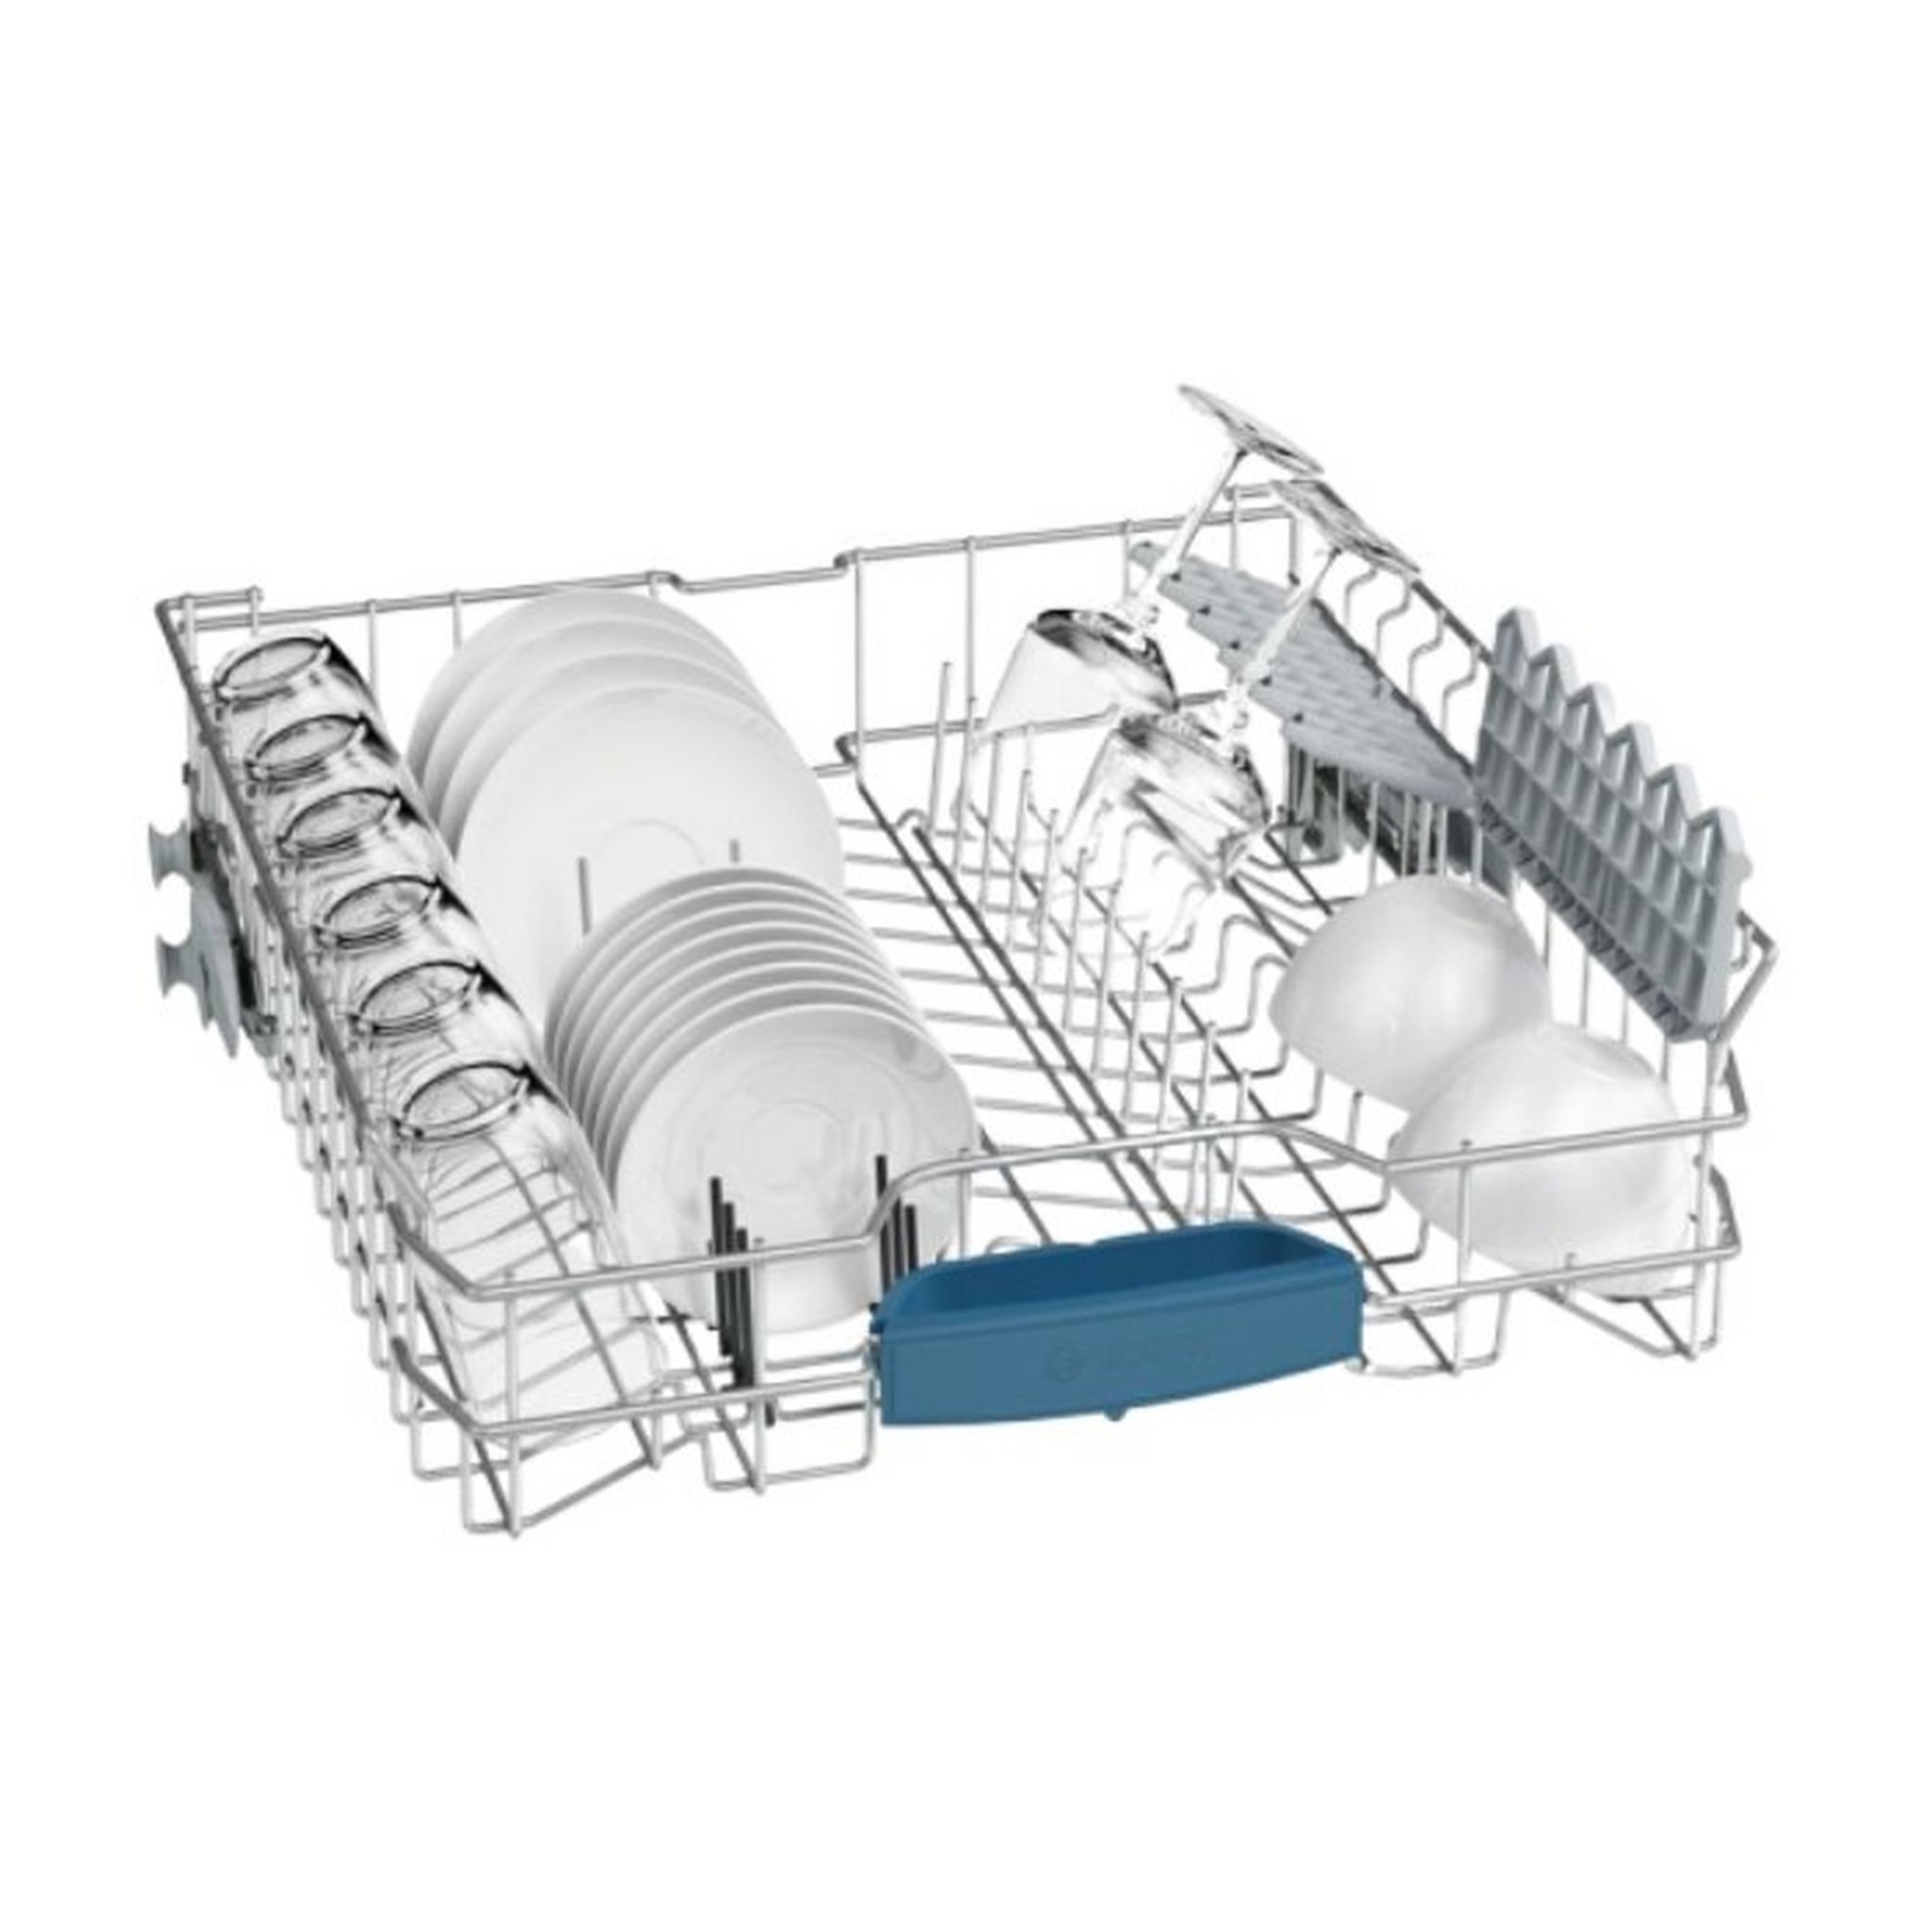 Bosch Built-In 60cm Dishwasher, 5 Programs, SMI53D05GC - Stainless Steel